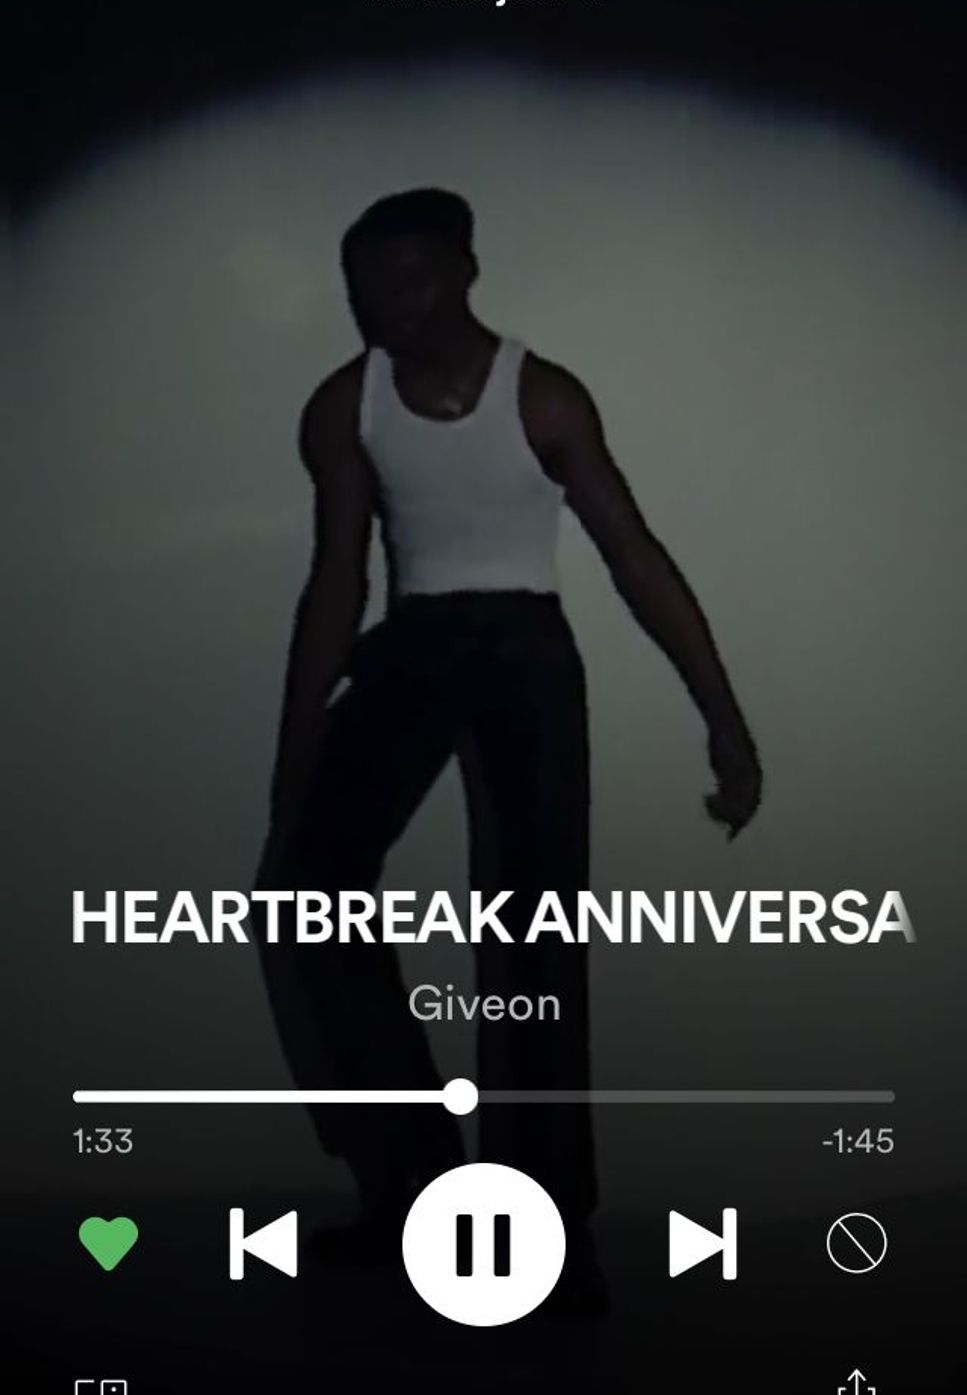 Giveon - Heartbreak Anniversary by Soohy